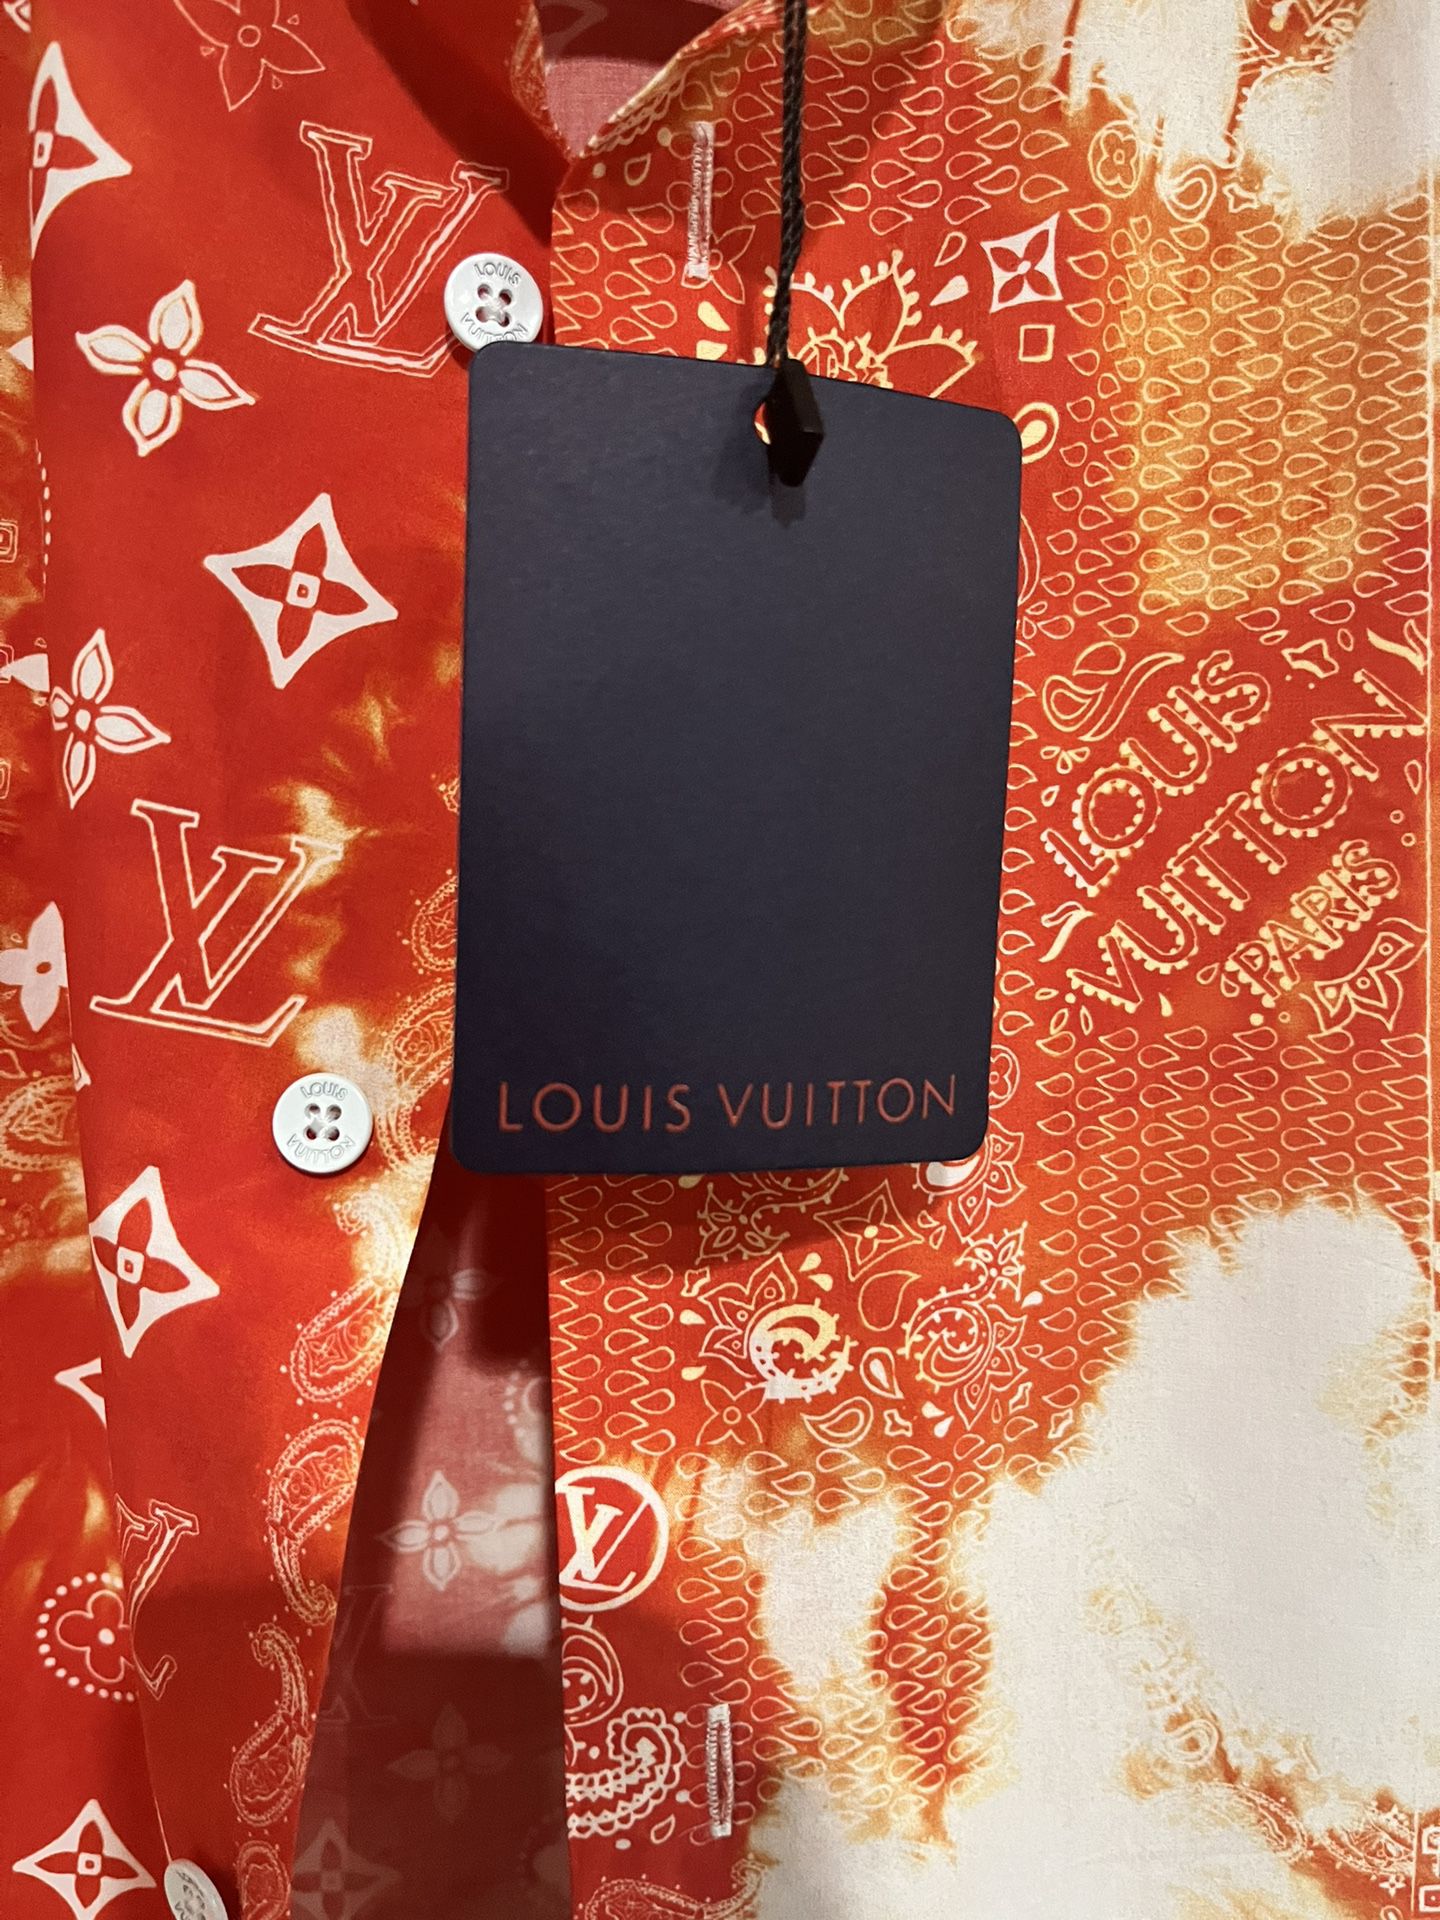 Louis Vuitton Bandana Print - 2 For Sale on 1stDibs